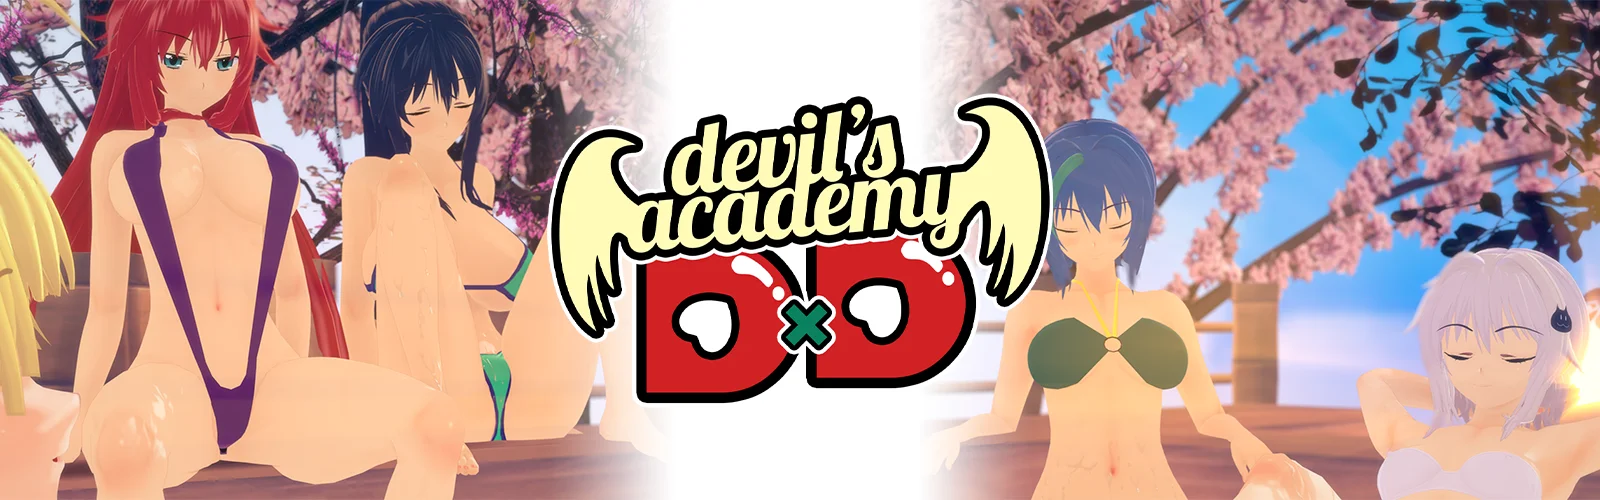 Devil's Academy DxD v.0.5